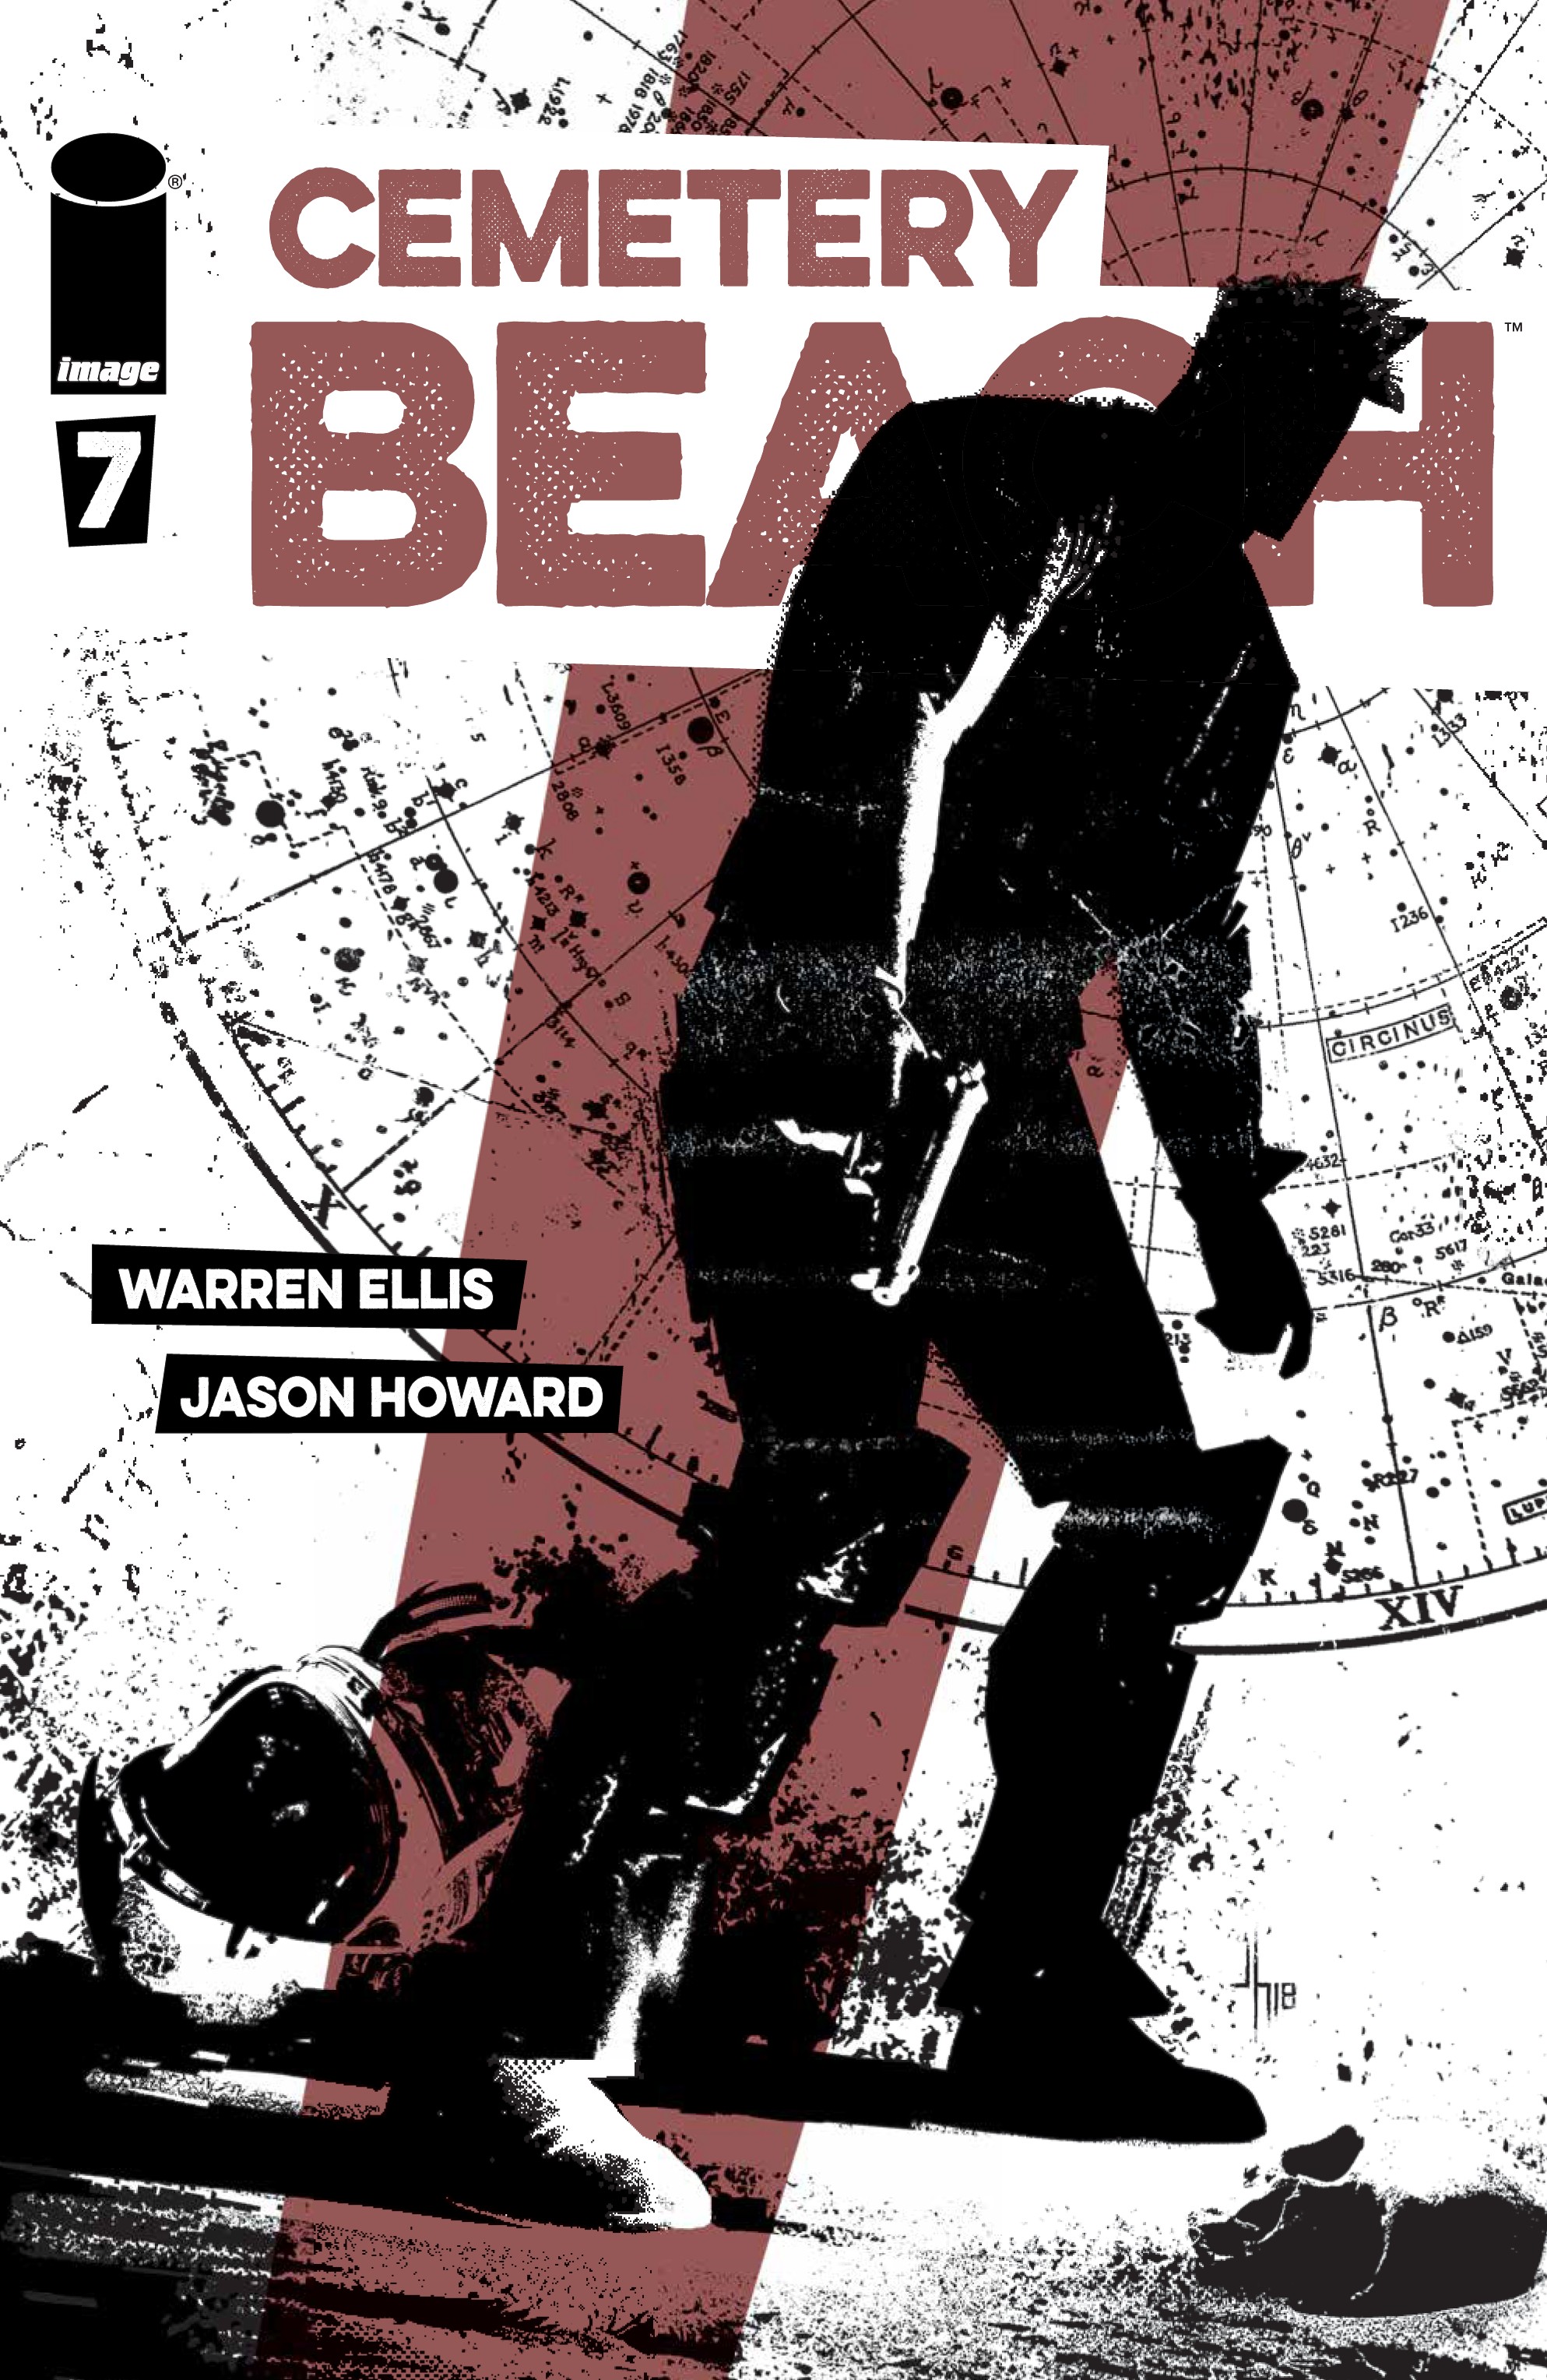 Read online Cemetery Beach comic -  Issue #7 - 1